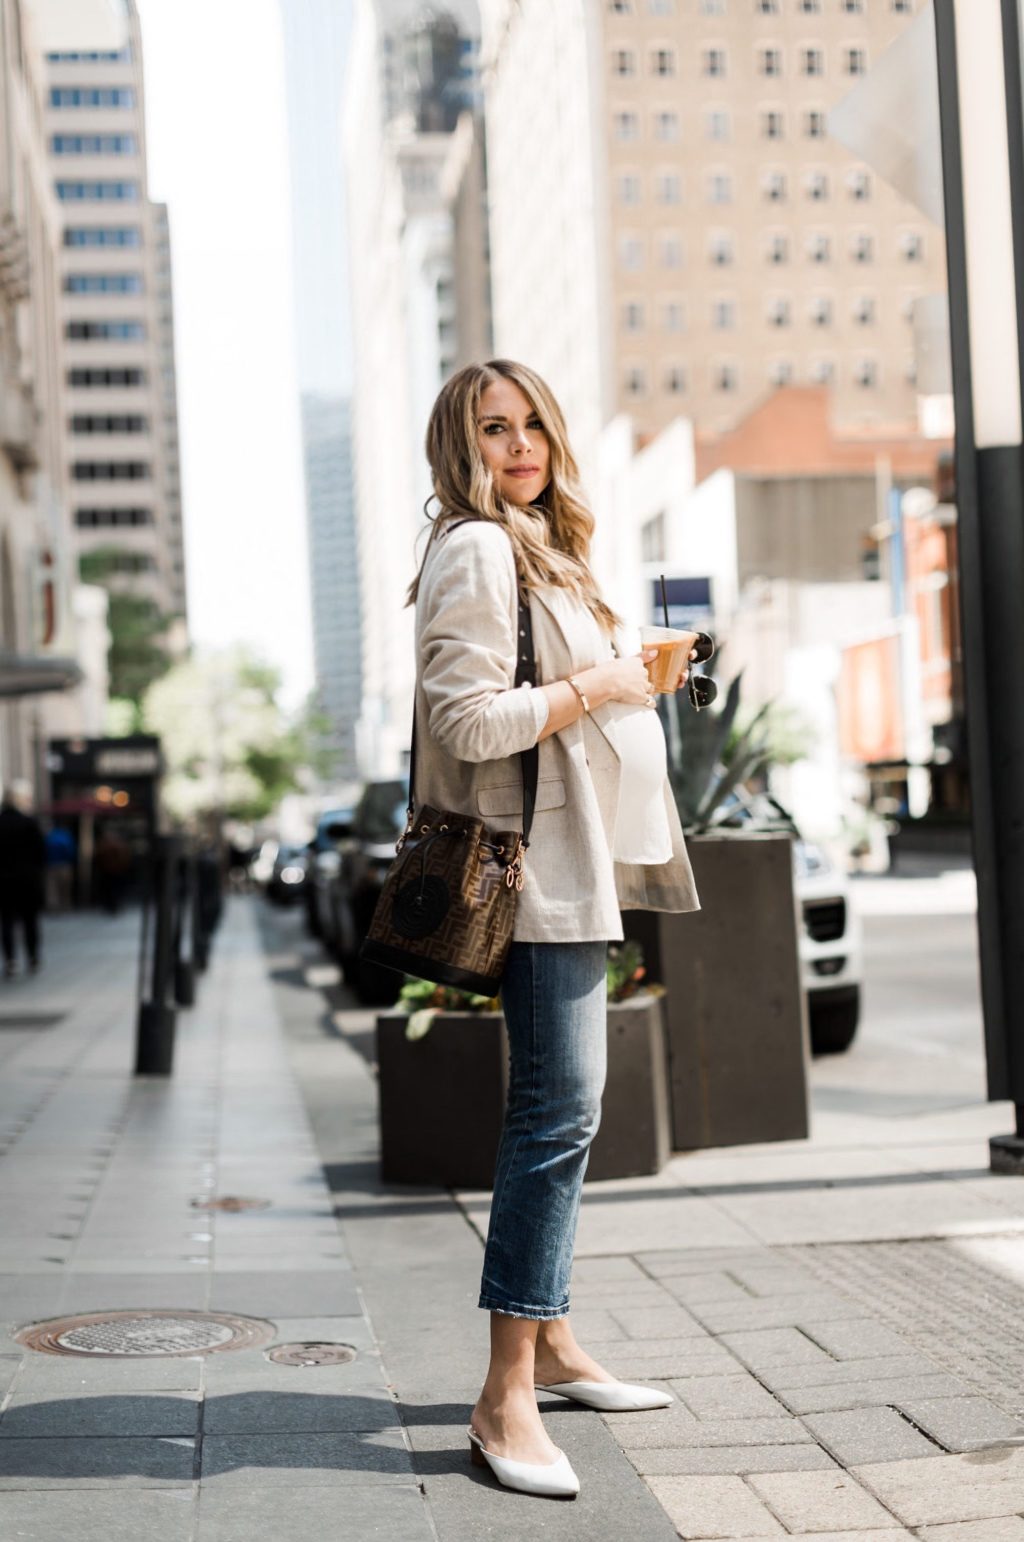 A Linen Blazer for Spring | The Teacher Diva: Dallas Fashion Blog featuring Beauty & Lifestyle